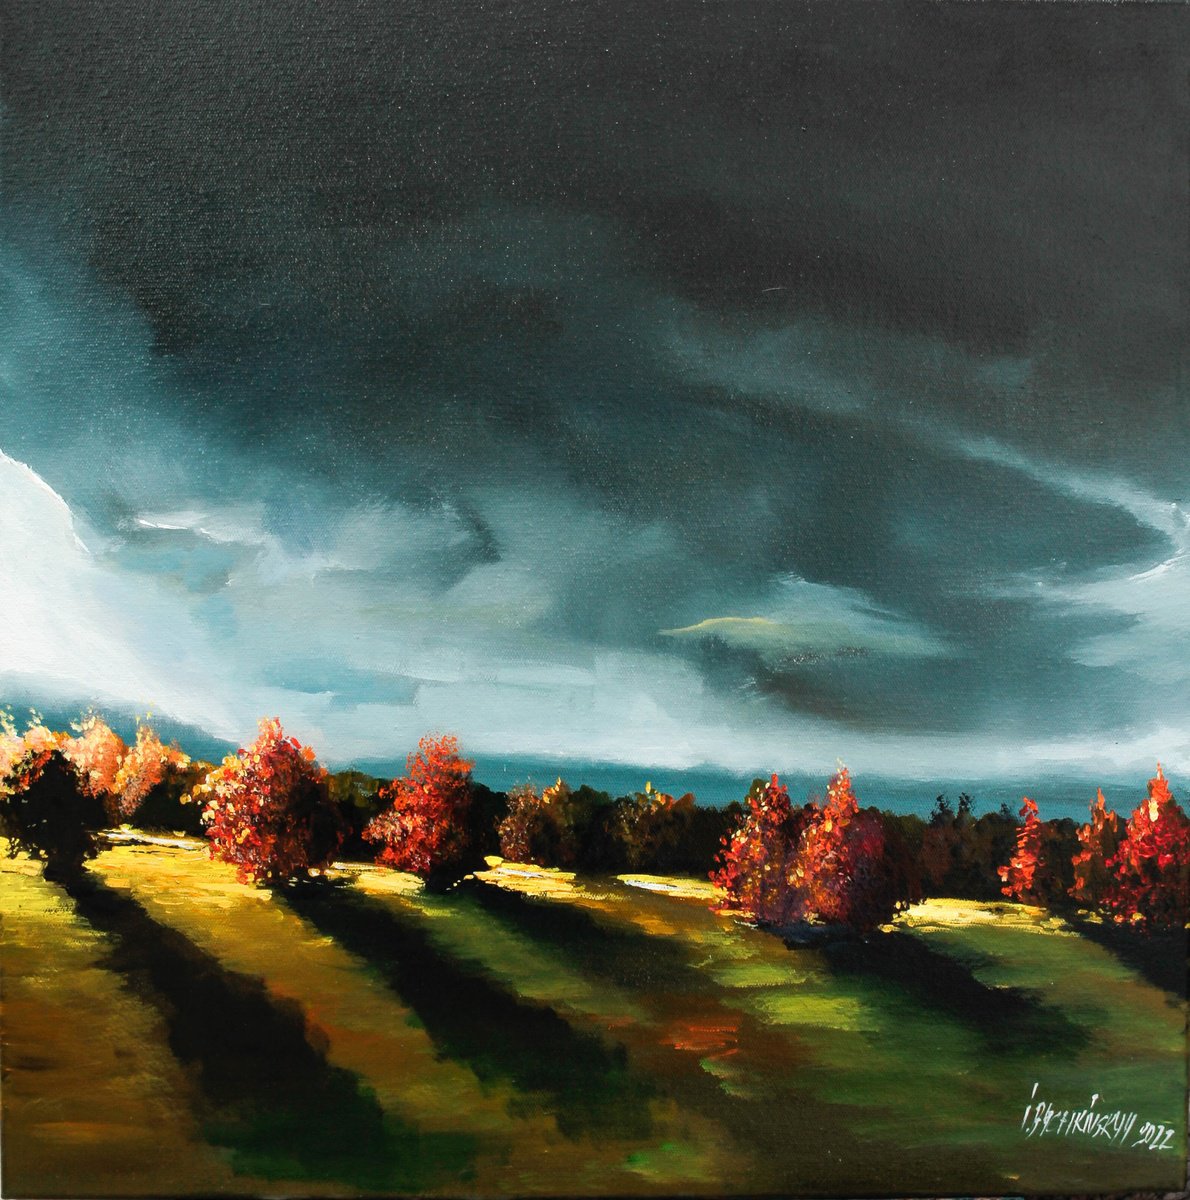 The last autumn storm by Ihor Bychkivskyy